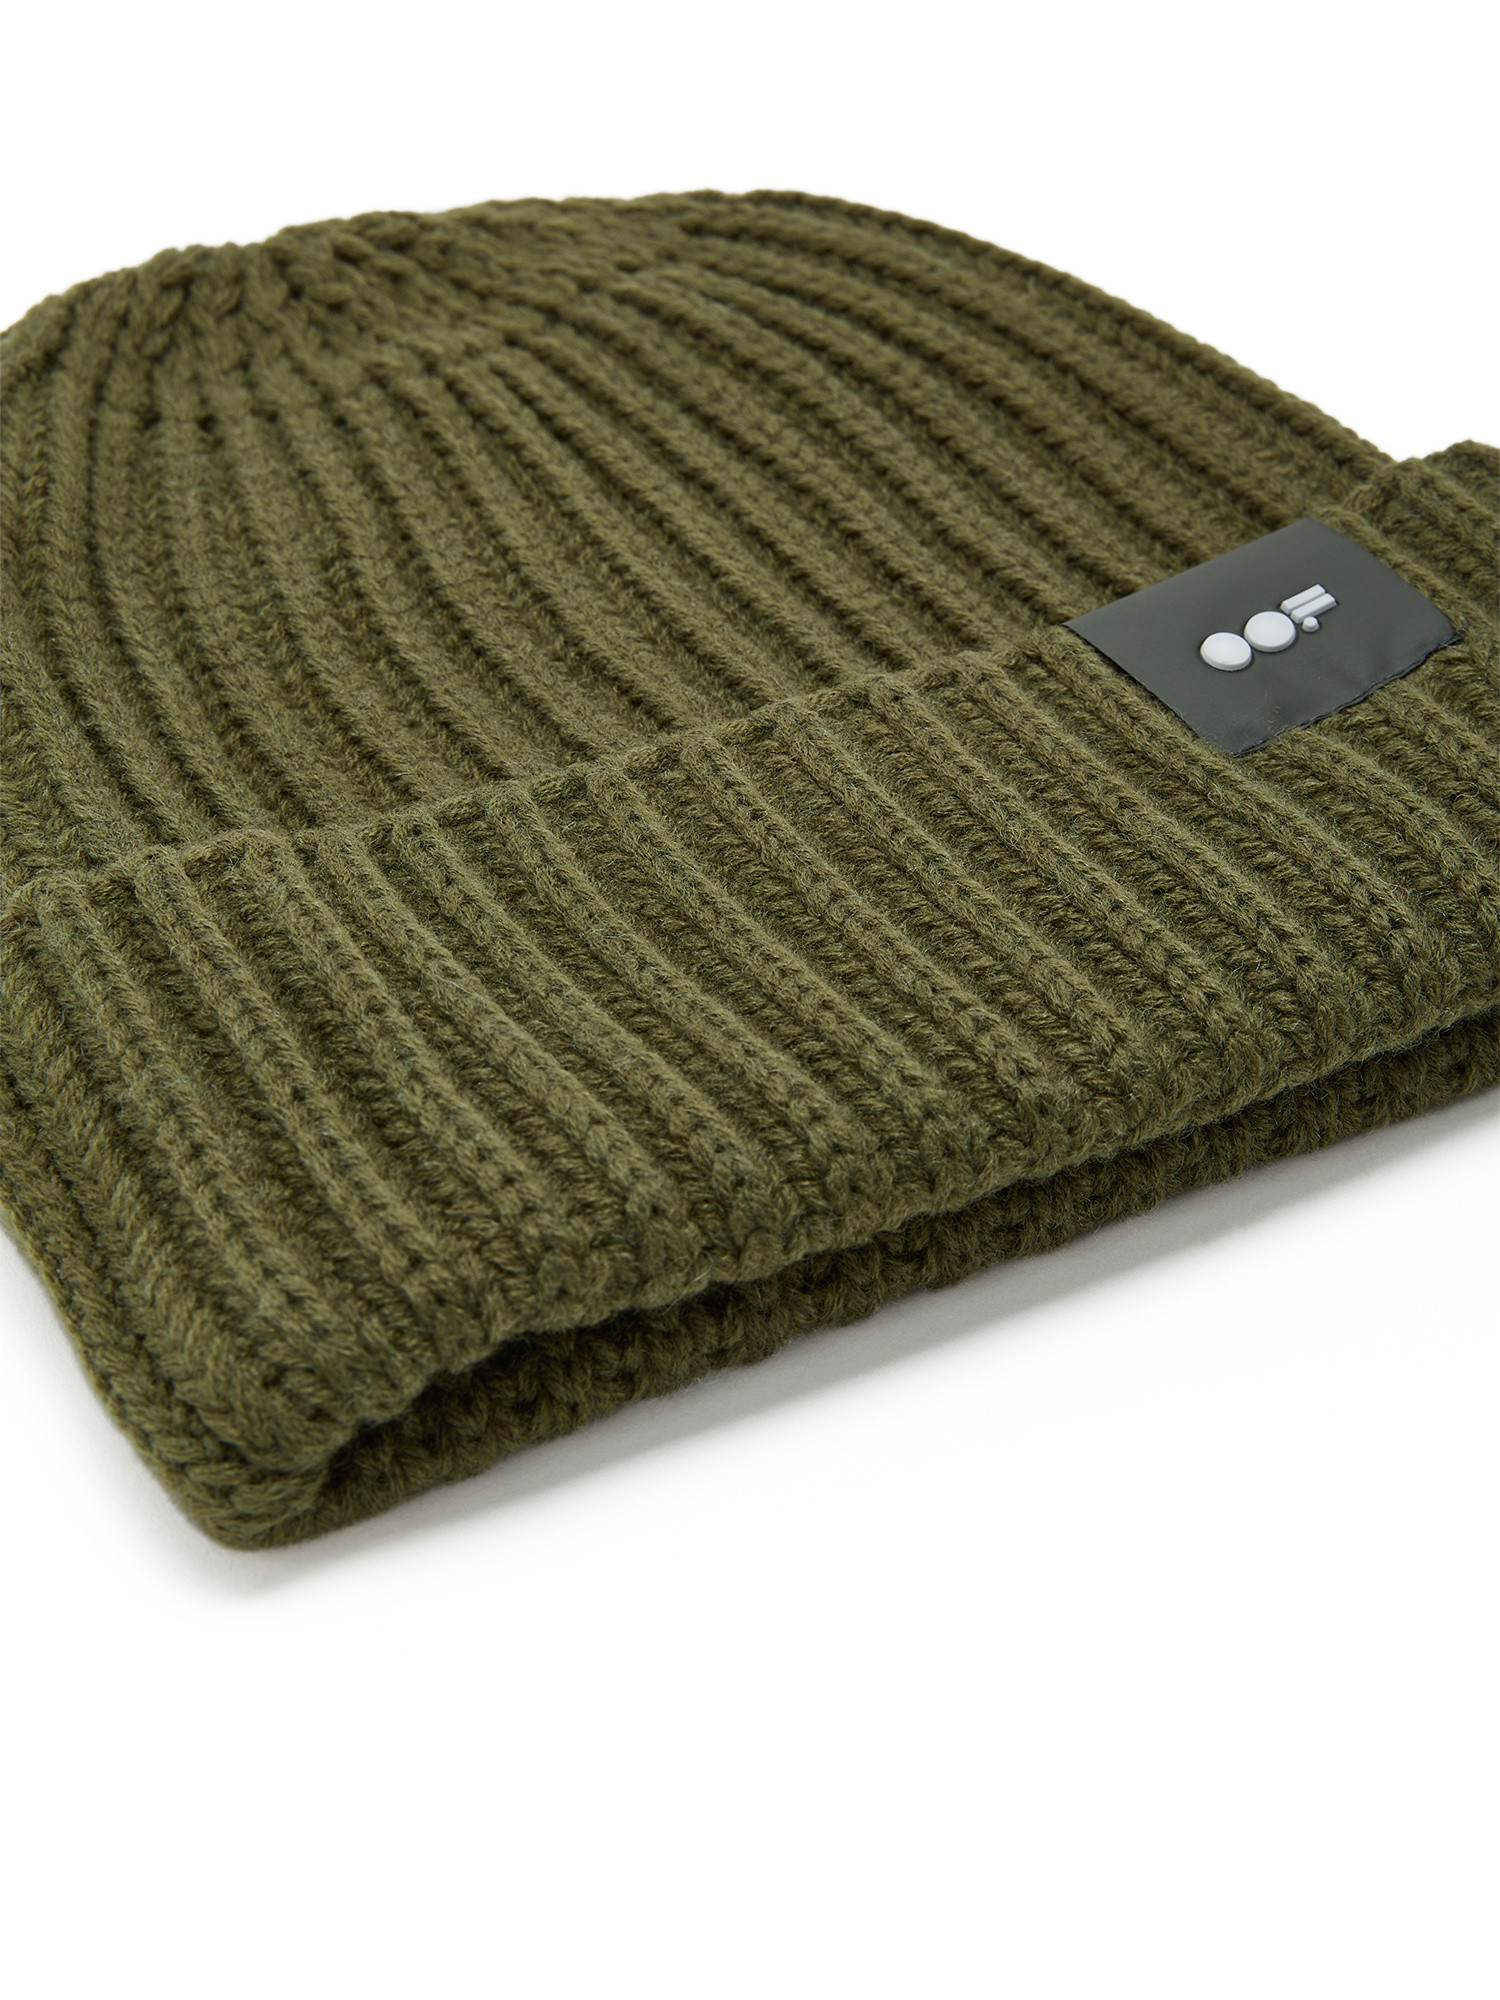 Oof Wear - Wool blend hat, Green, large image number 1